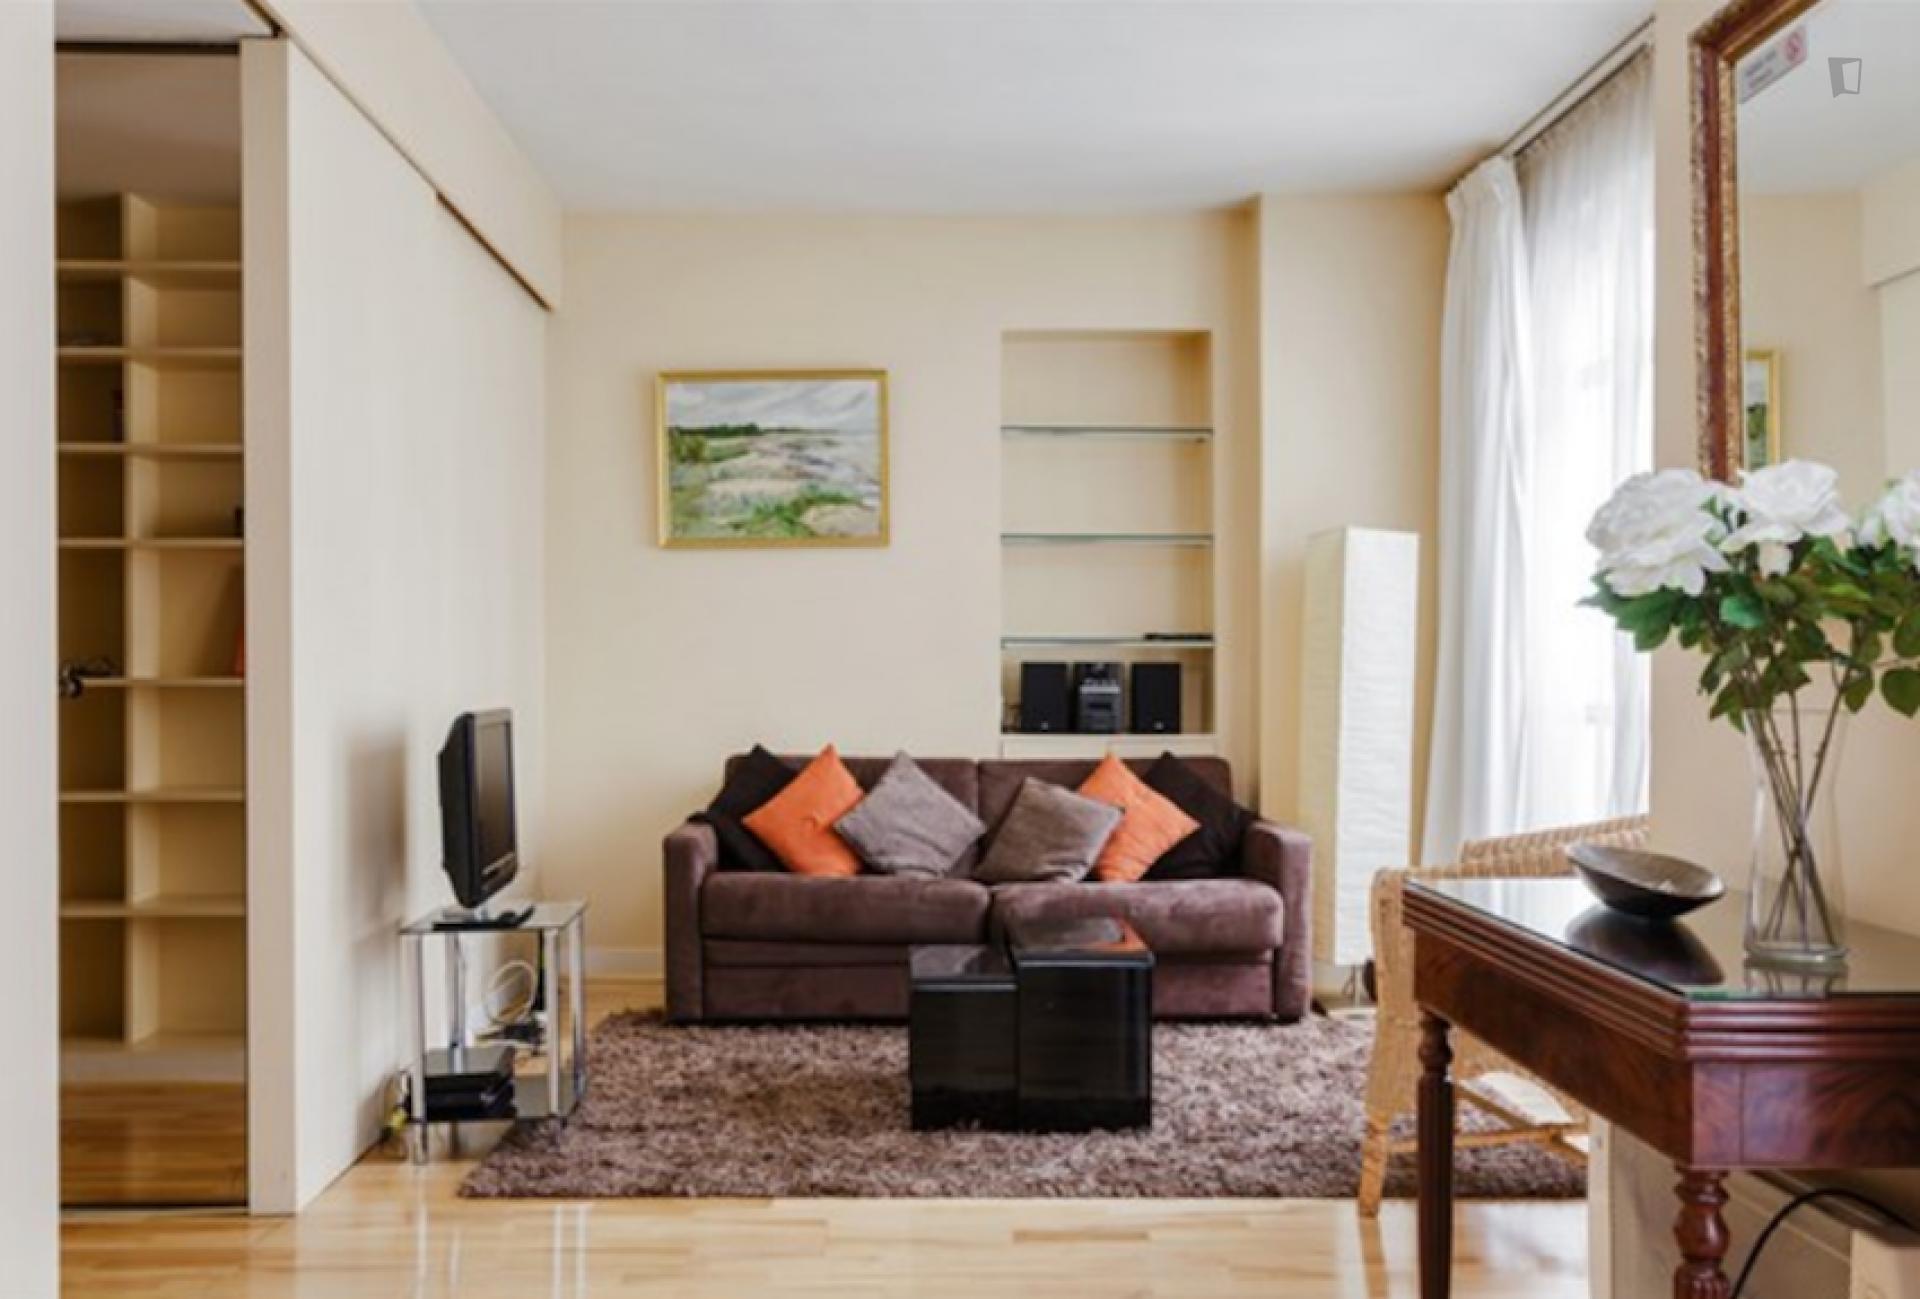 Rue Galande - Furnished apartment in Paris